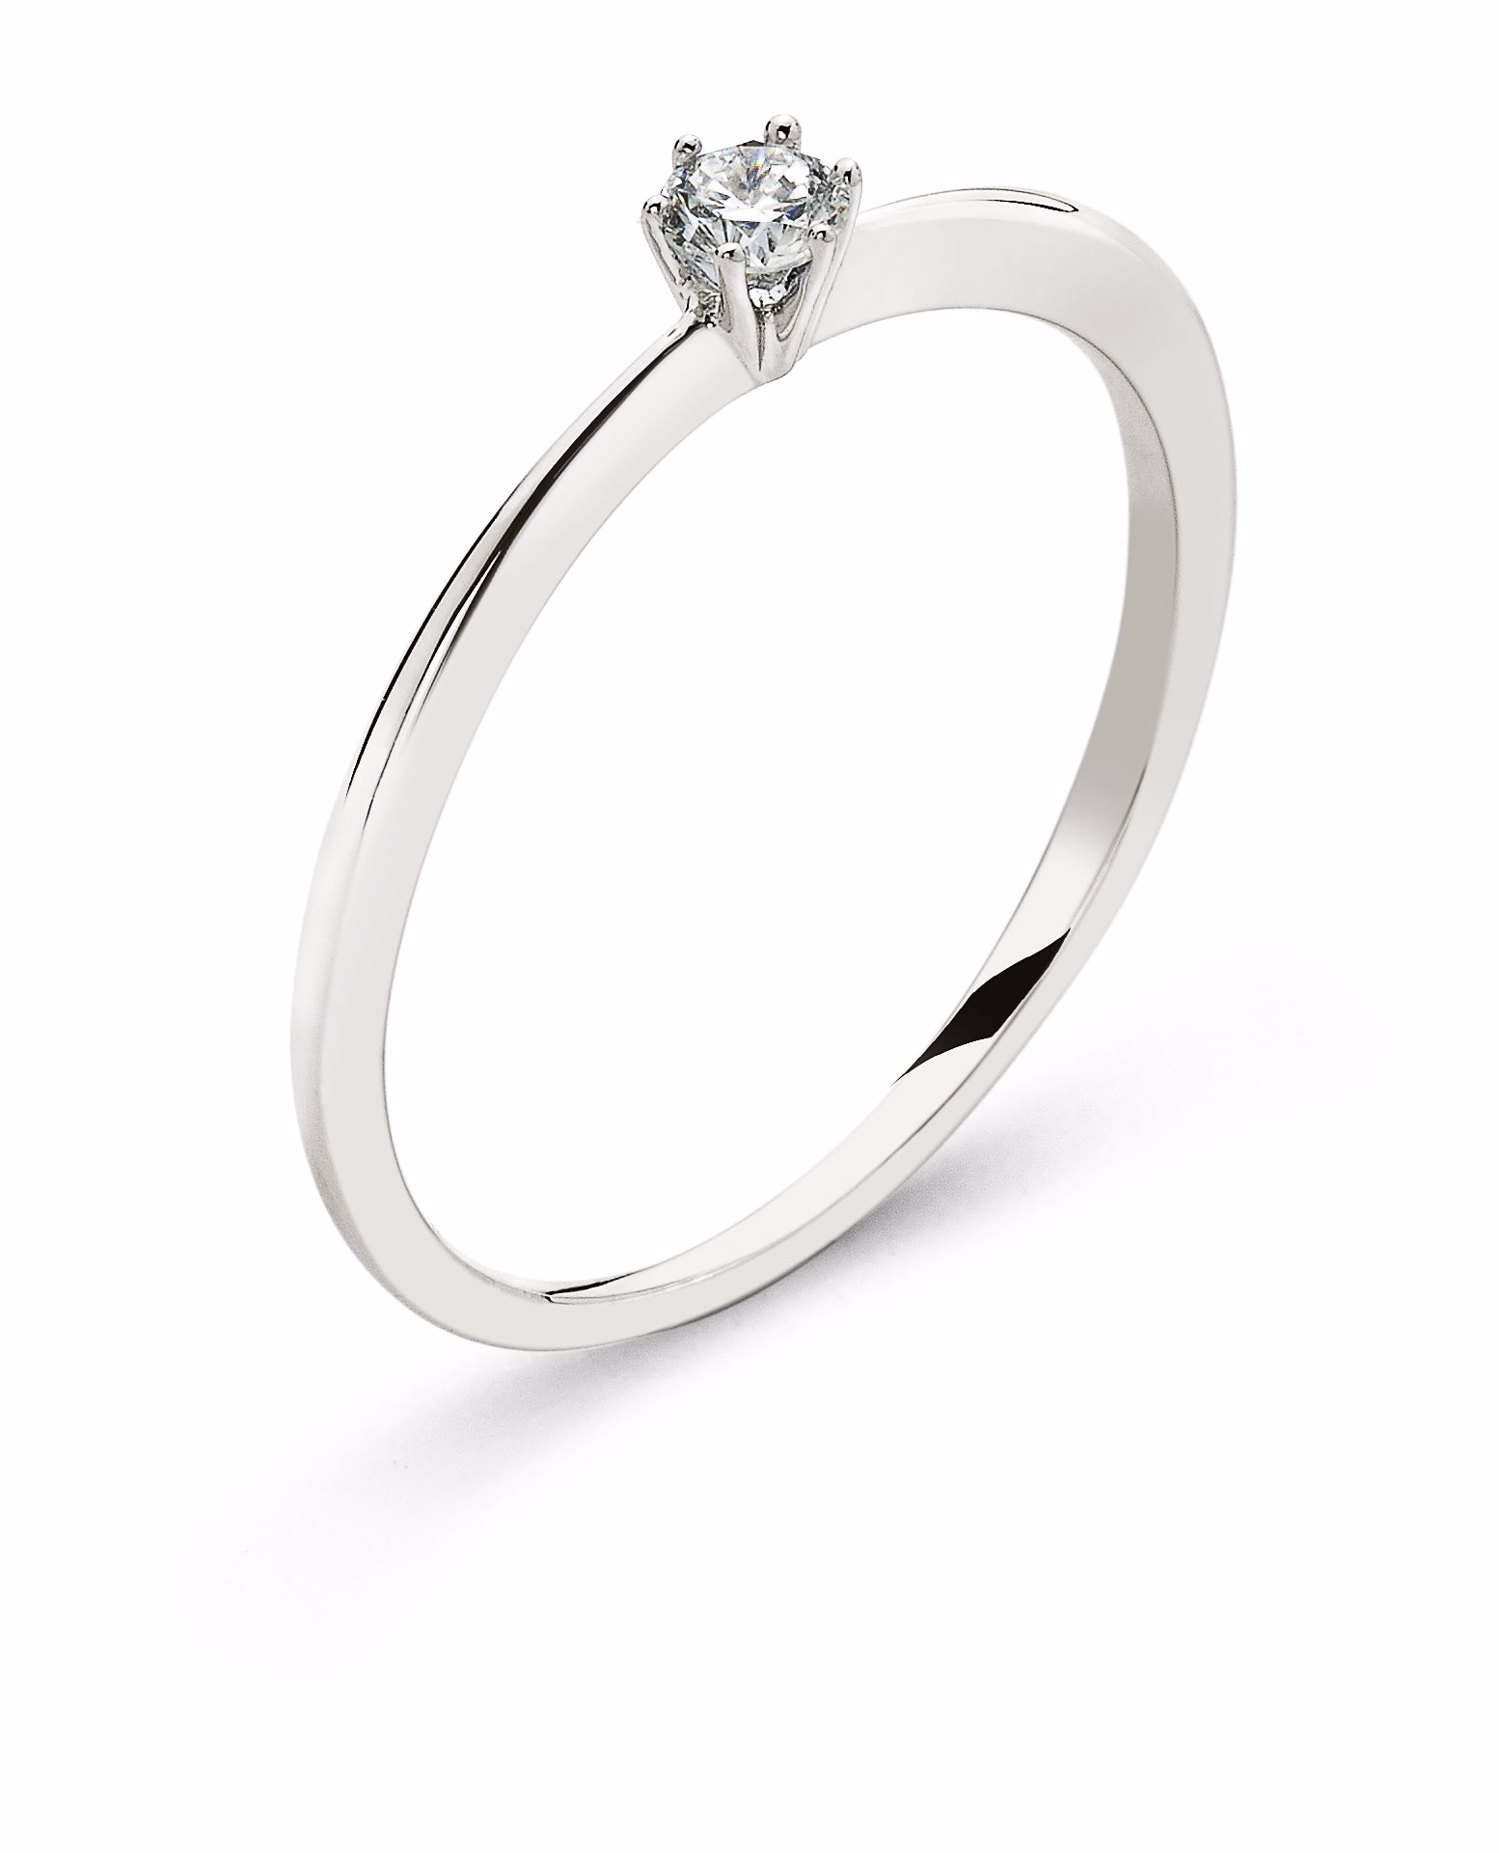 AURONOS Prestige Solitaire Ring White Gold 18K Diamond 0.10ct